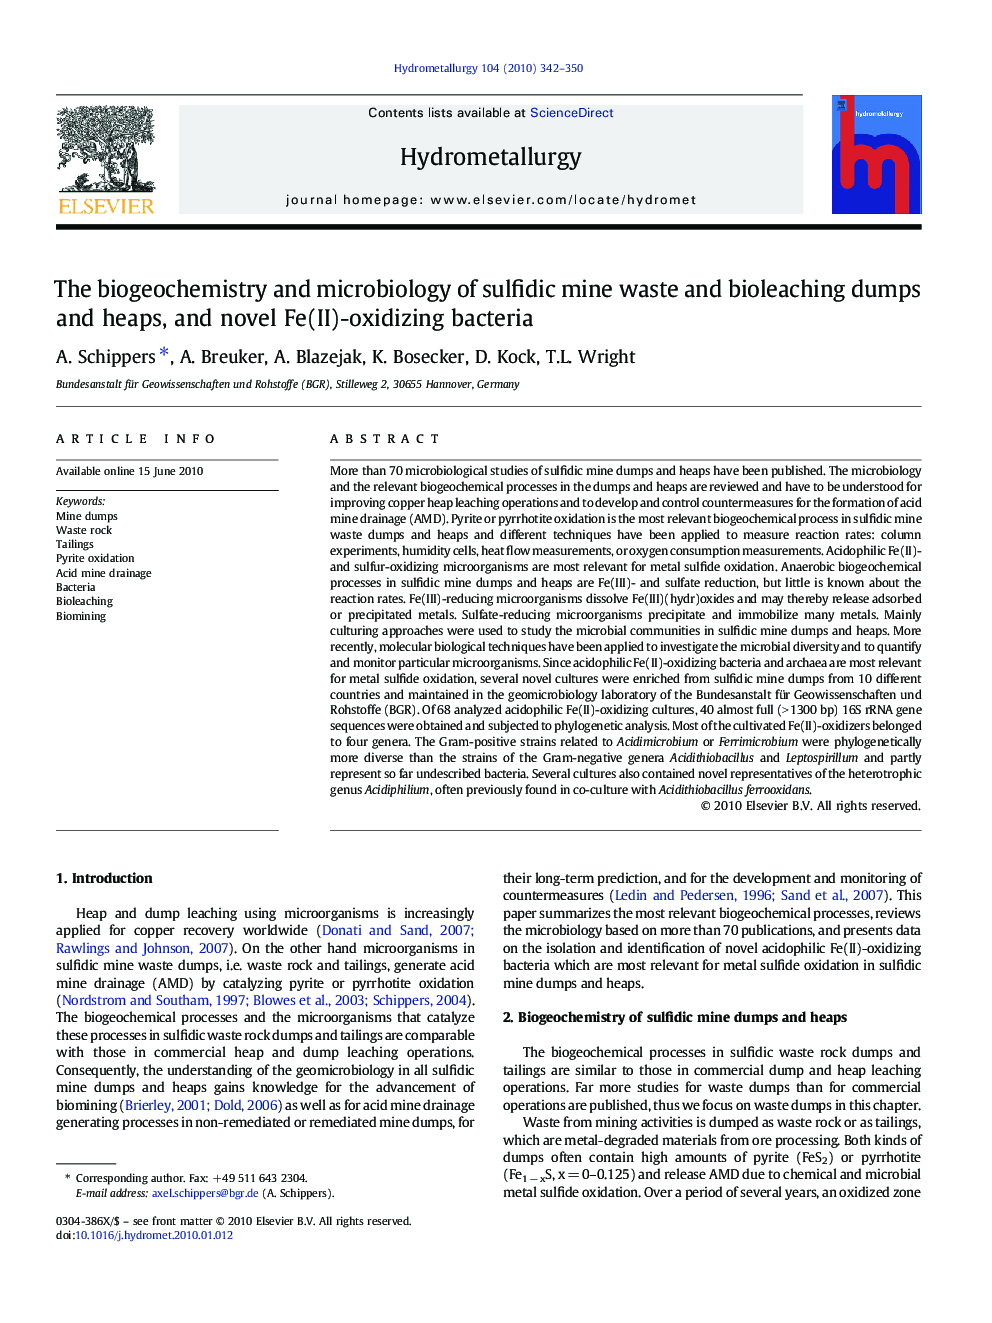 The biogeochemistry and microbiology of sulfidic mine waste and bioleaching dumps and heaps, and novel Fe(II)-oxidizing bacteria